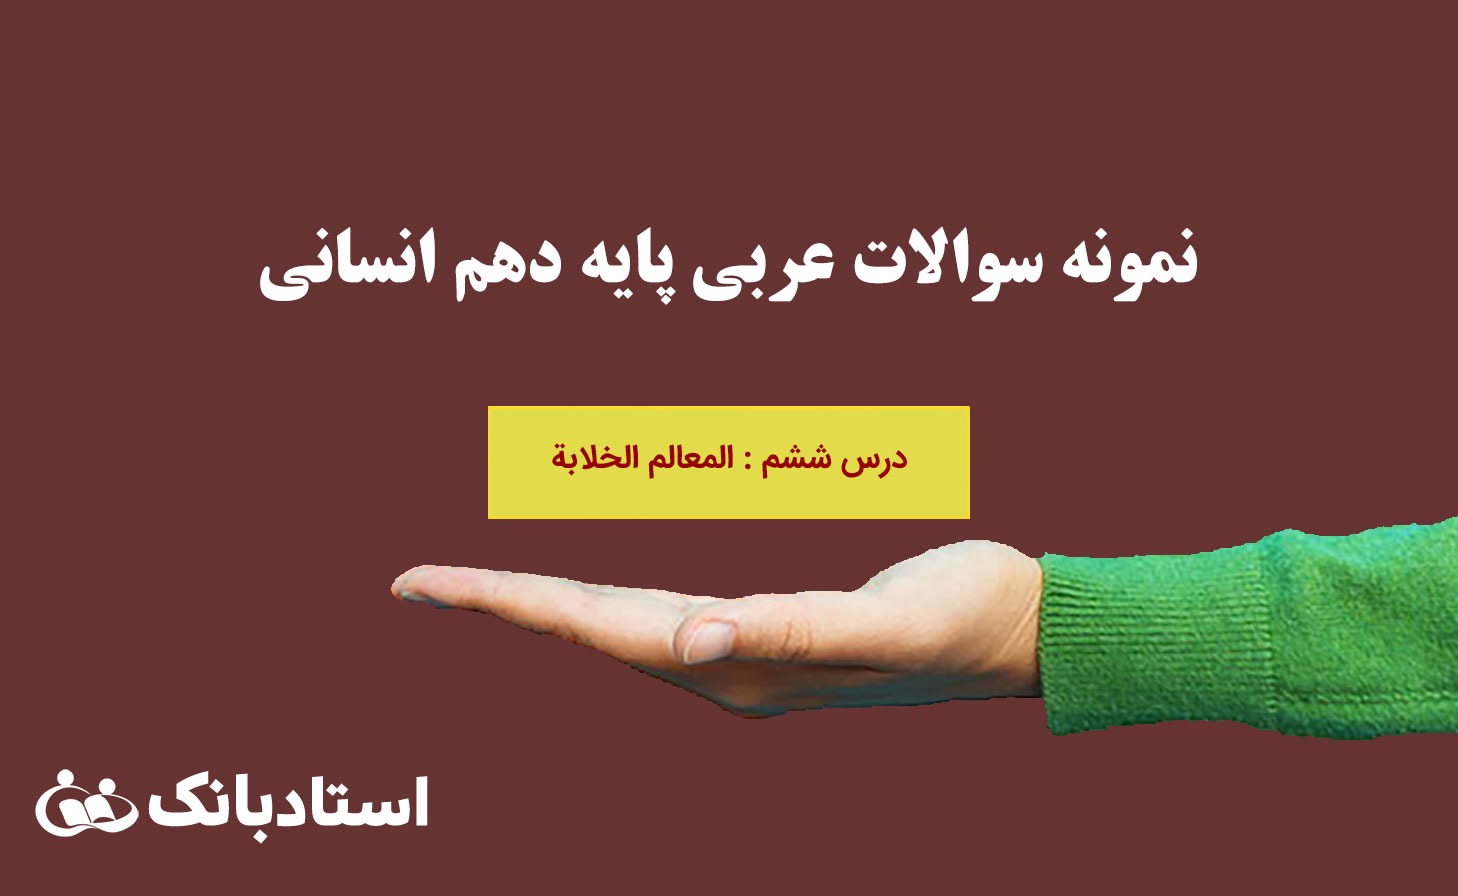 نمونه سوال عربی پایه دهم انسانی درس 6، المعالم الخلابة با جواب